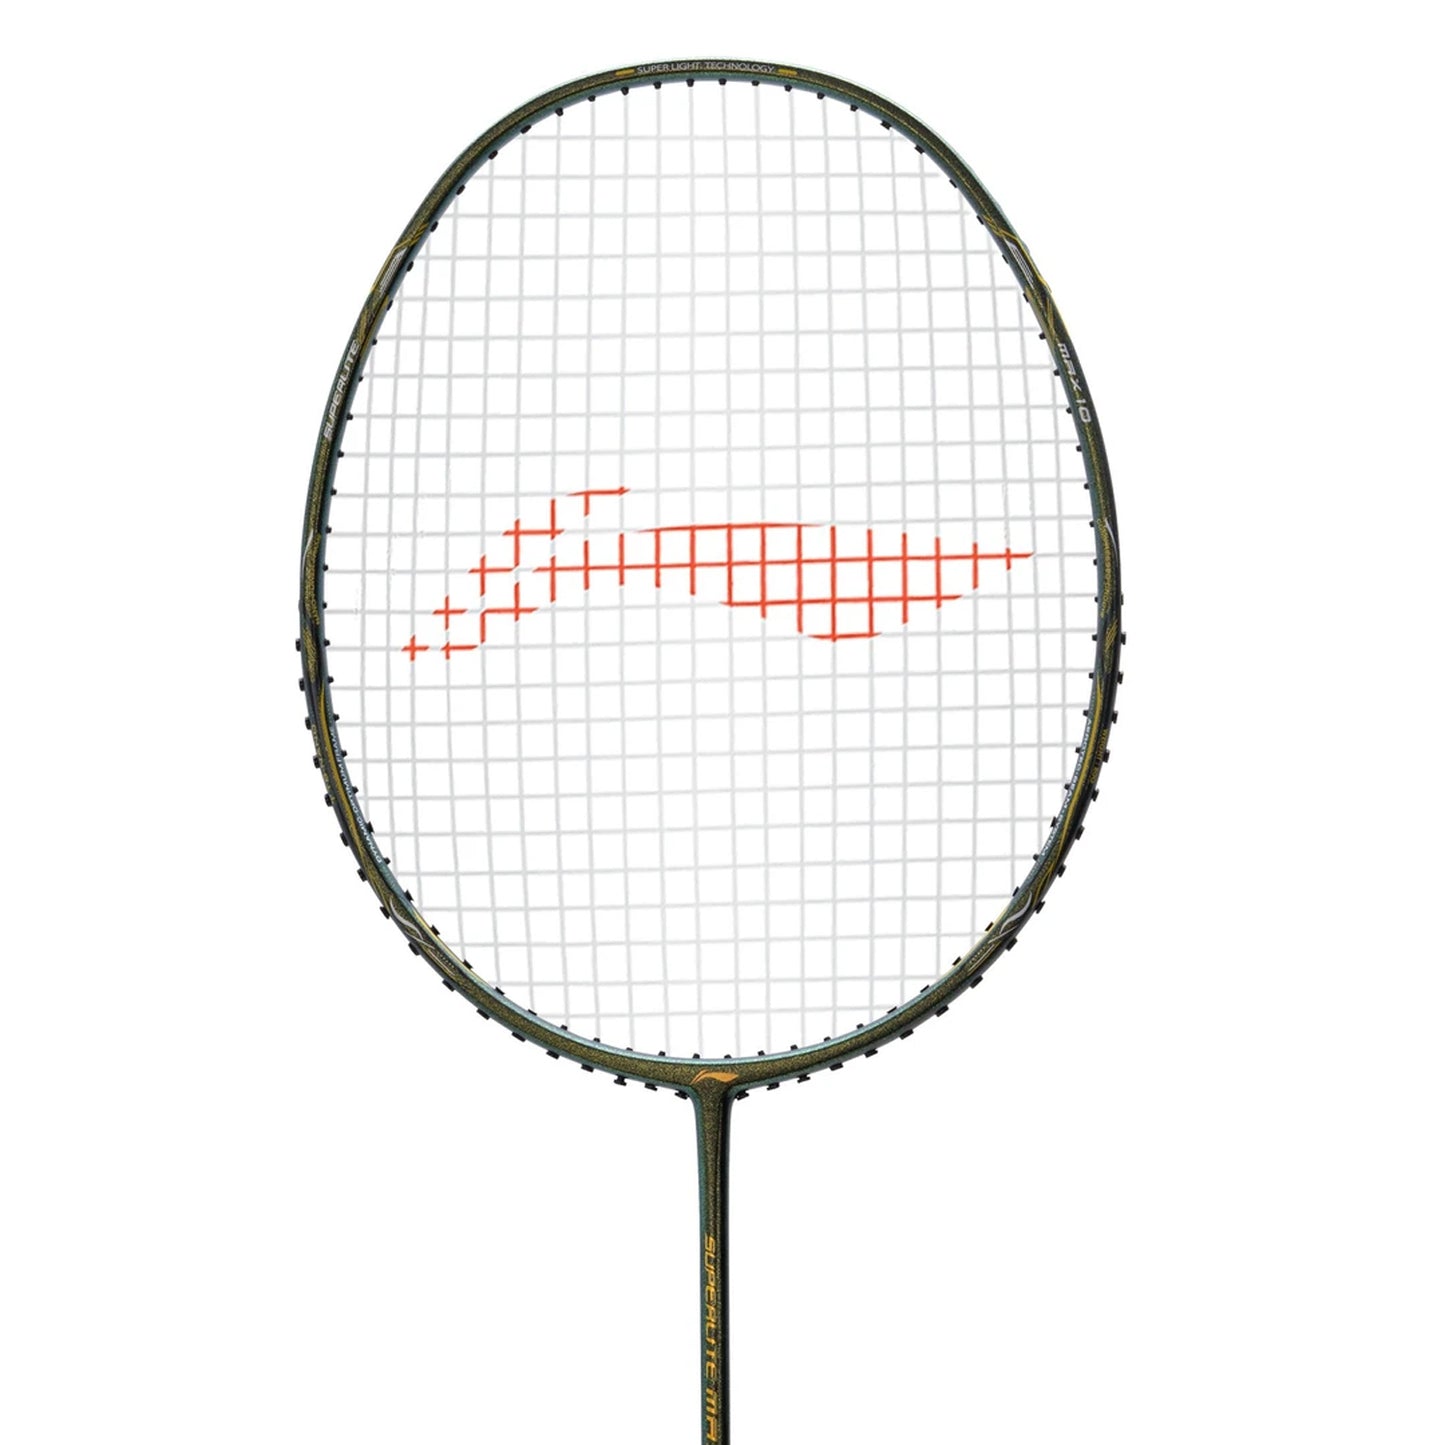 Li-Ning G-Force Superlite Max 10 Badminton Racquet - Best Price online Prokicksports.com